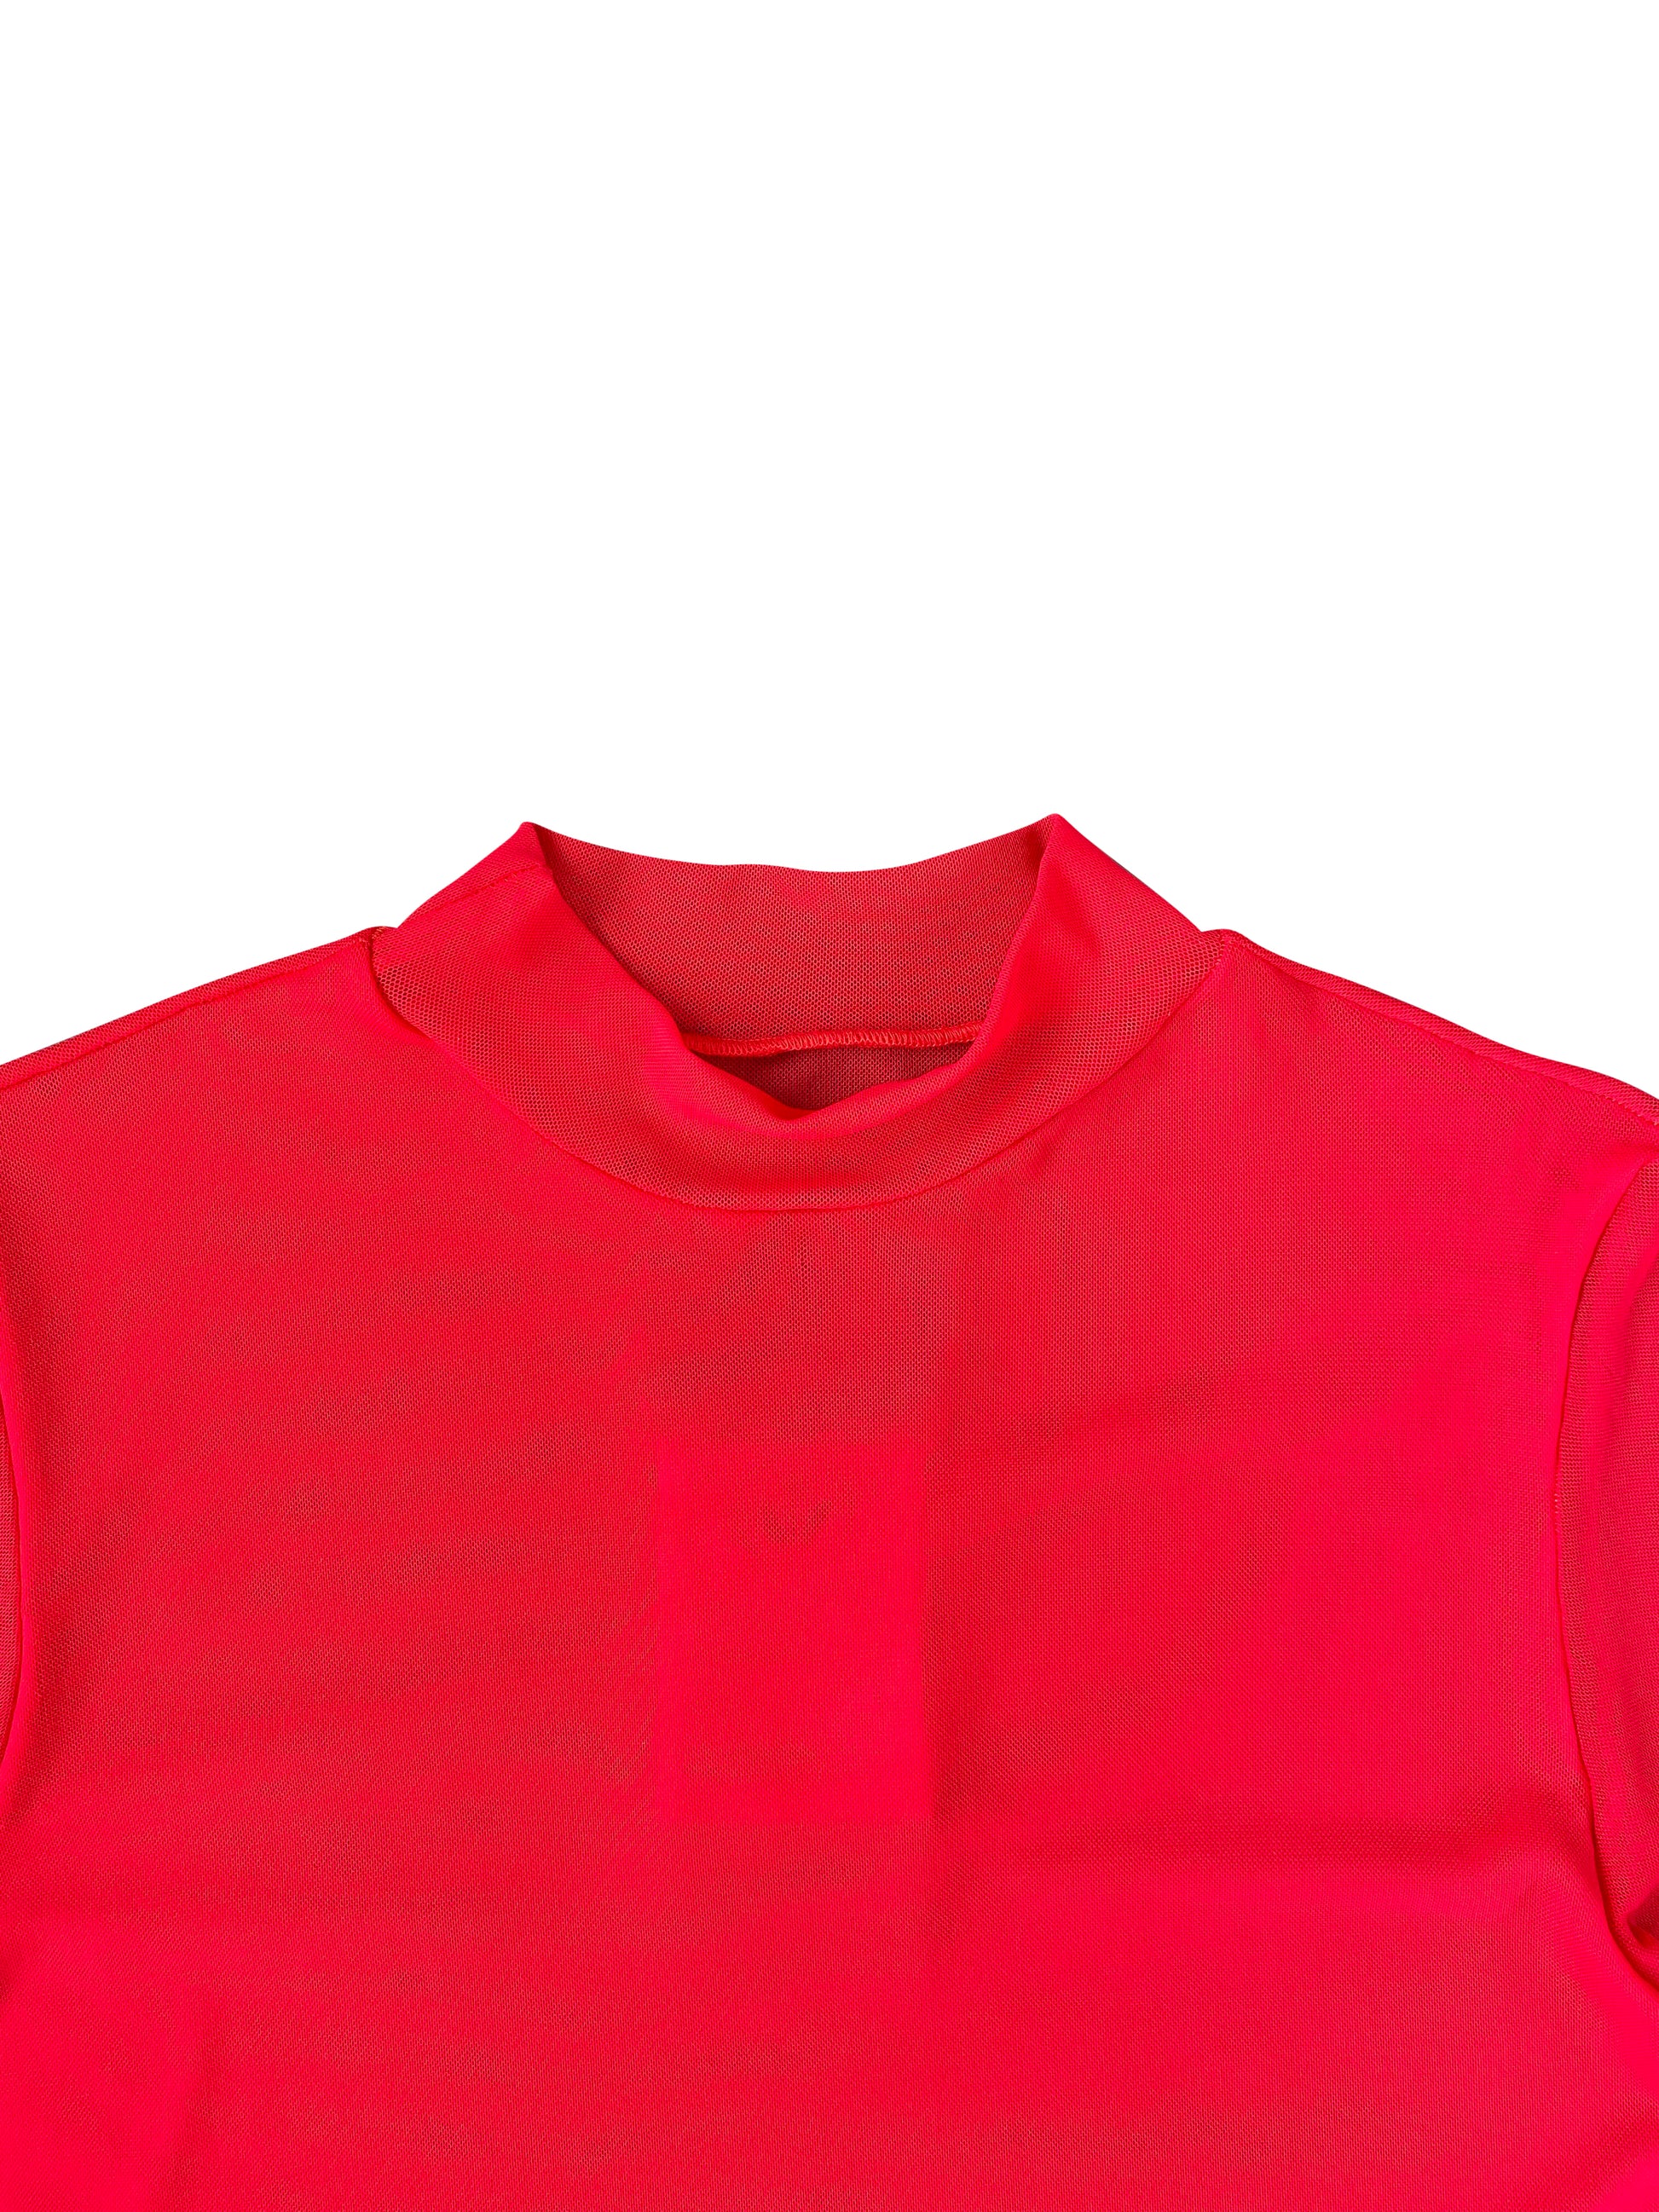 Mesh Fabric 4 way Stretch T shirt Bra in Scarlett Red